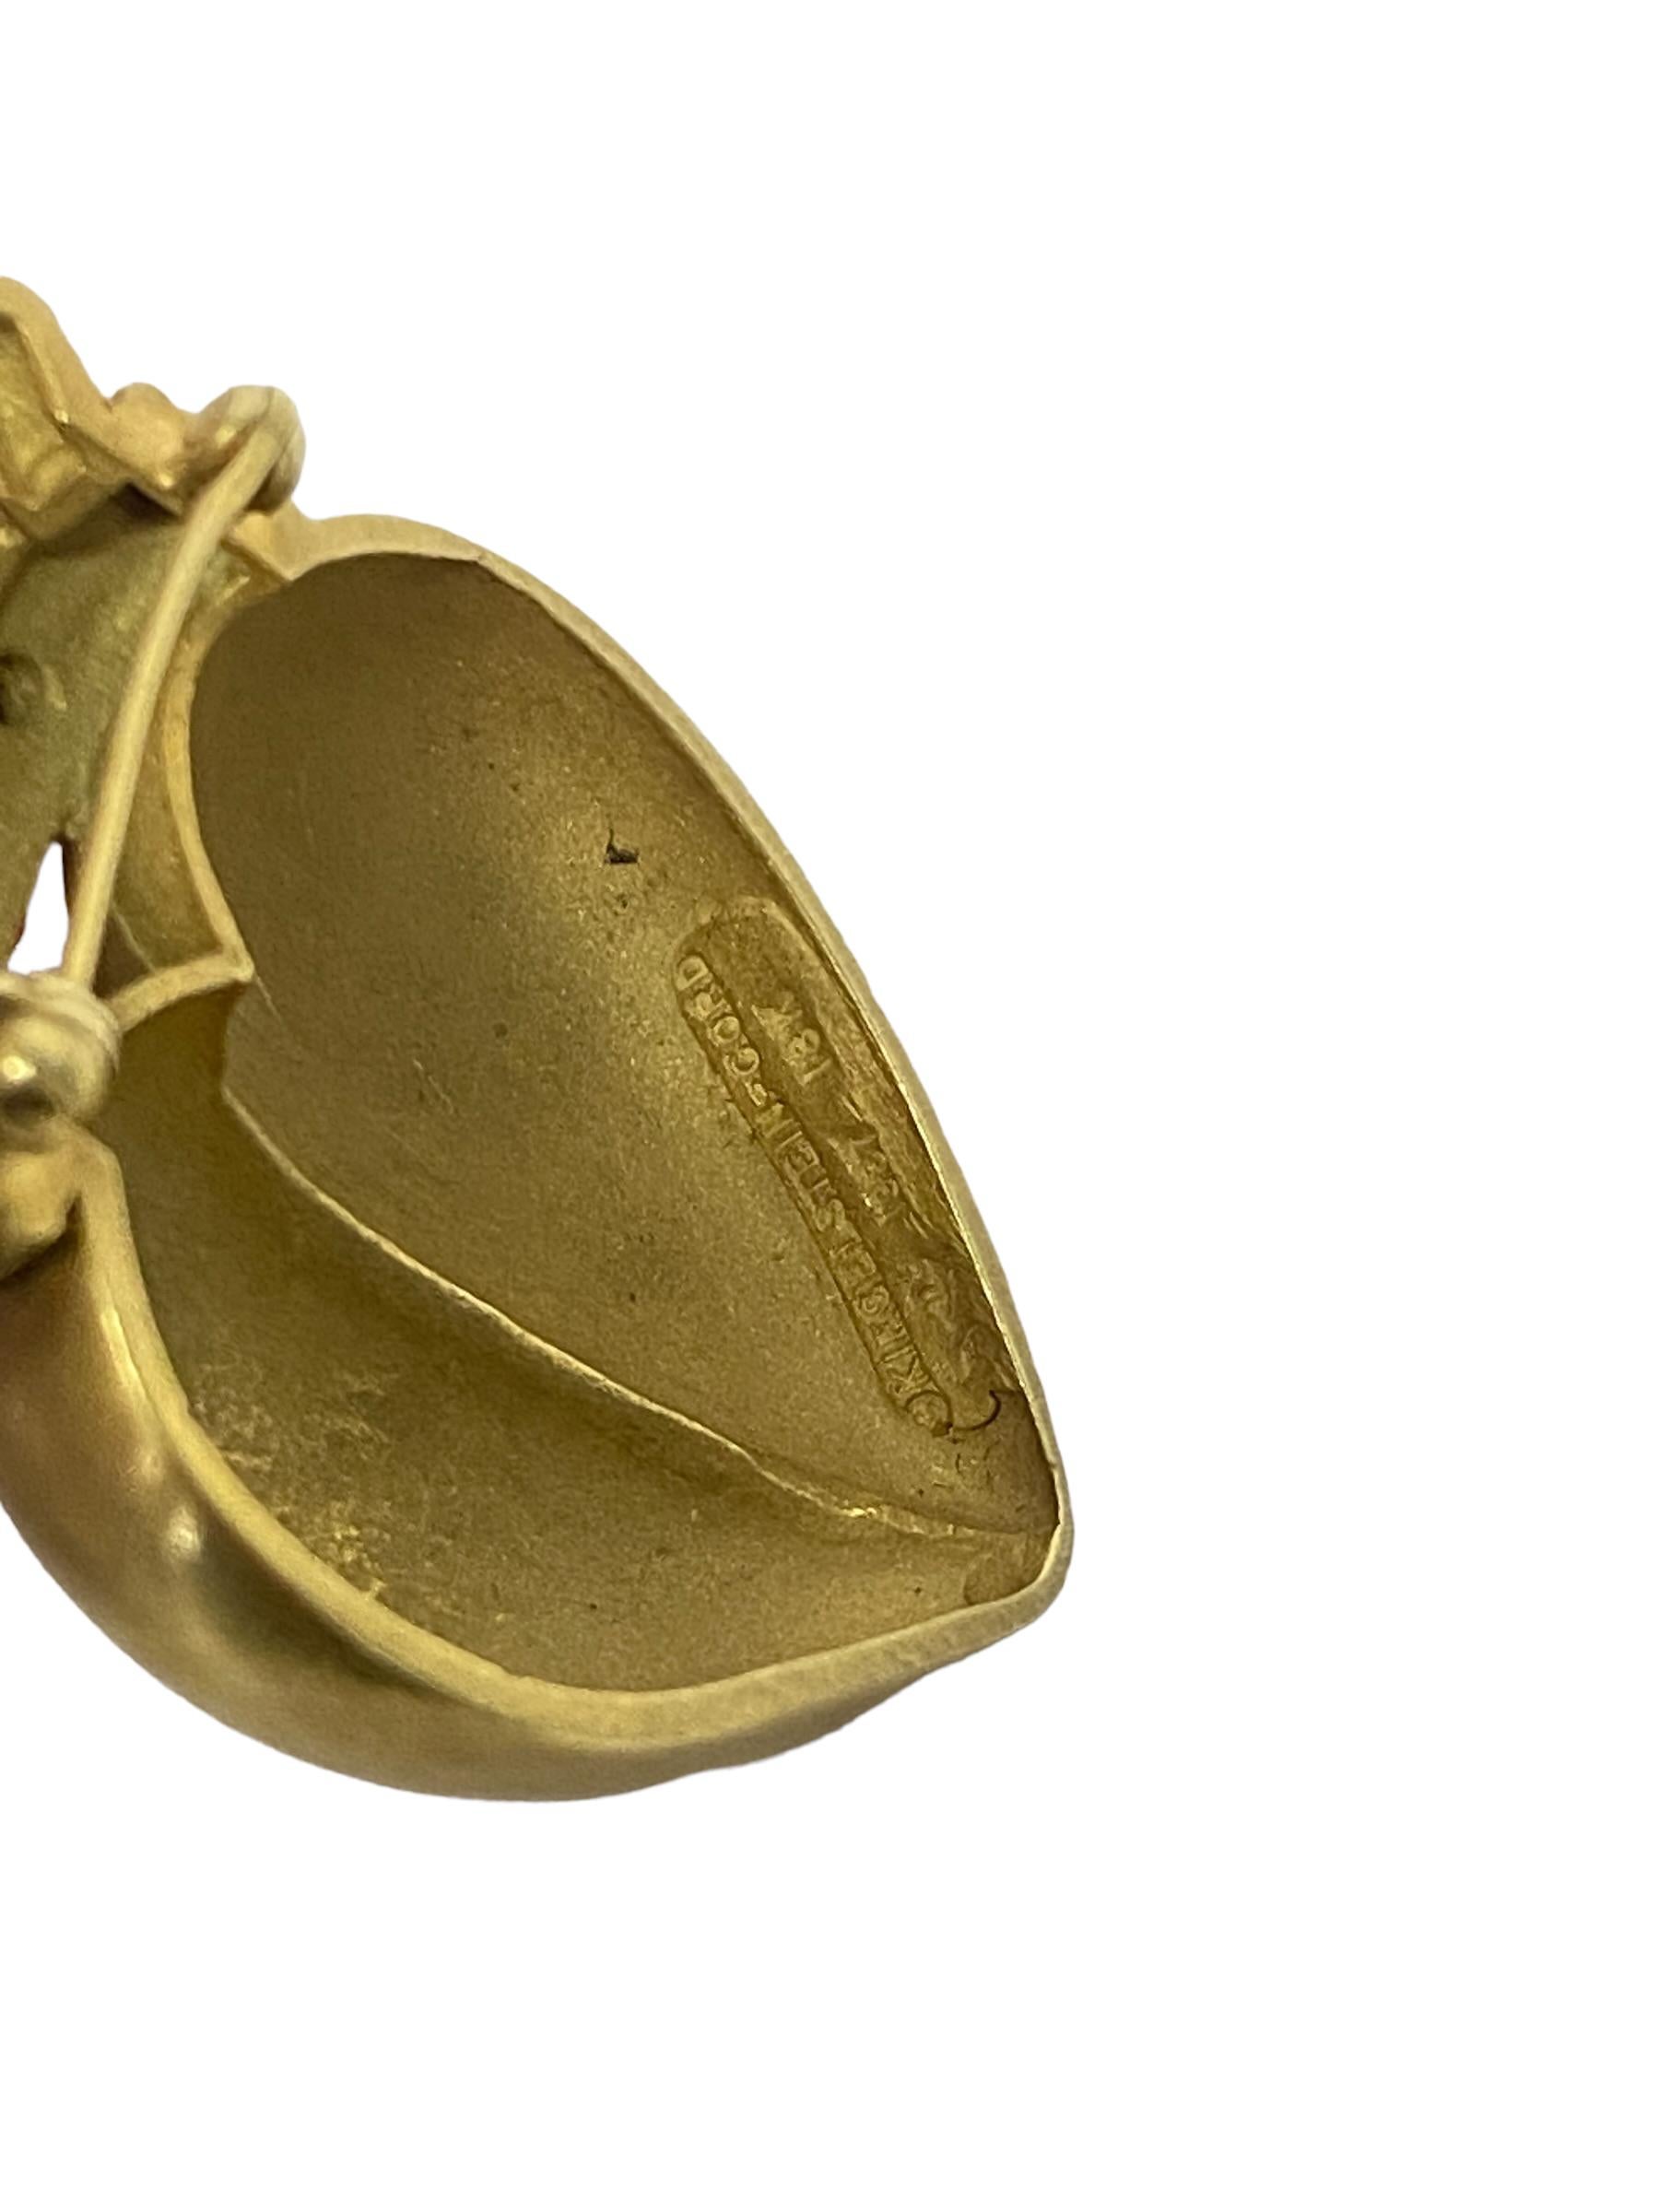 Jumbo 1987 Kieselstein Cord 18K Yellow Gold Crowned Heart Pin Pendant 1